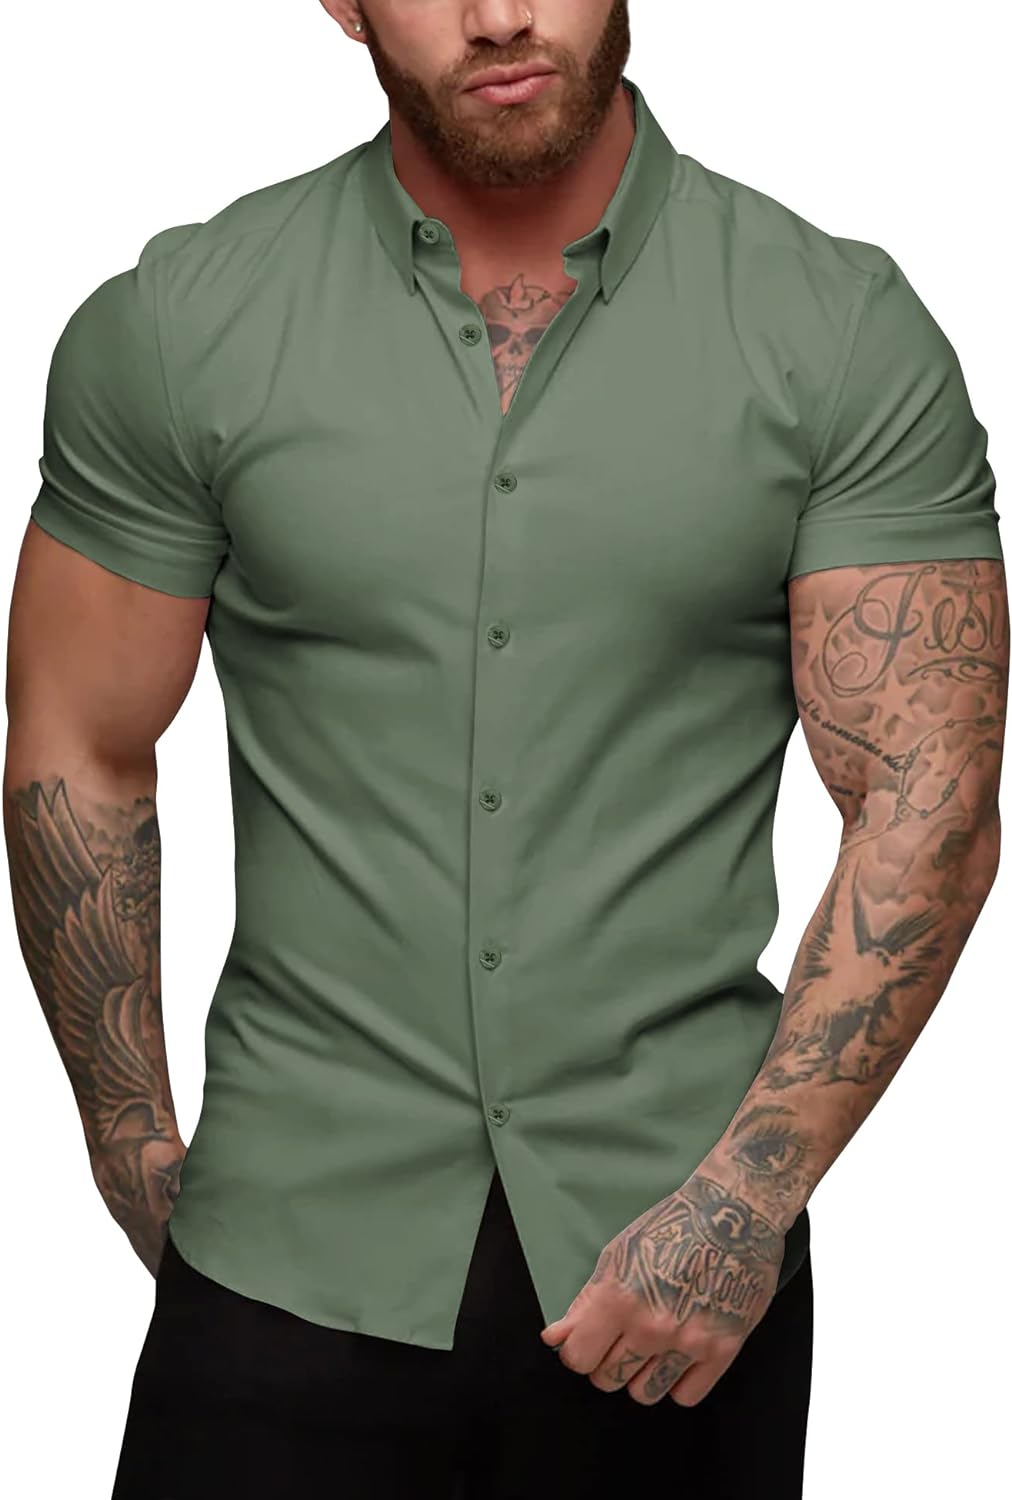 The Damon Dress Shirt